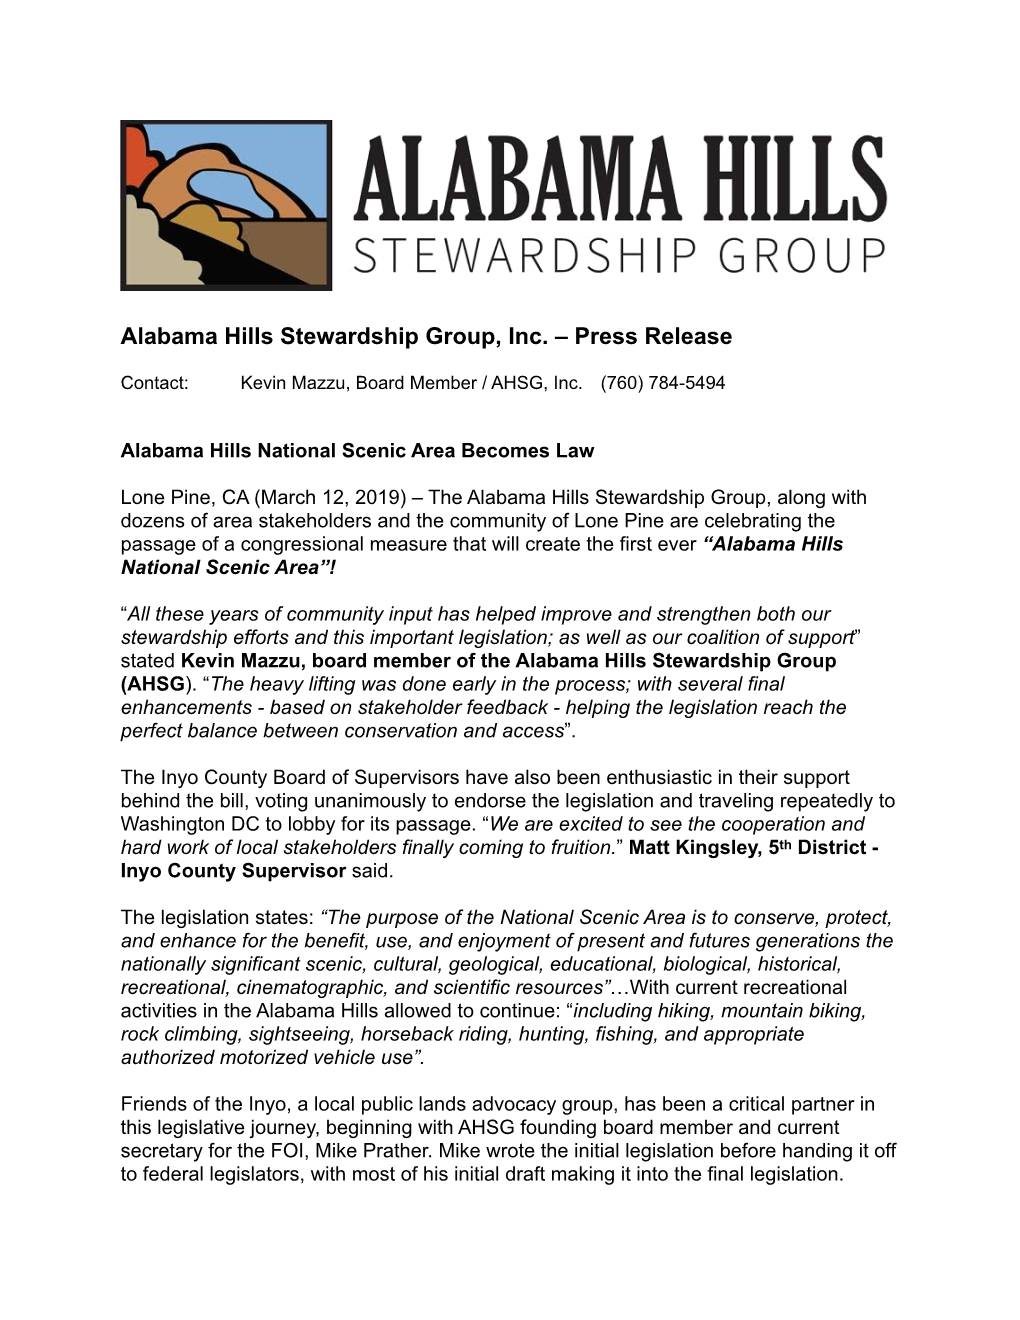 Alabama Hills Stewardship Group – Press Release